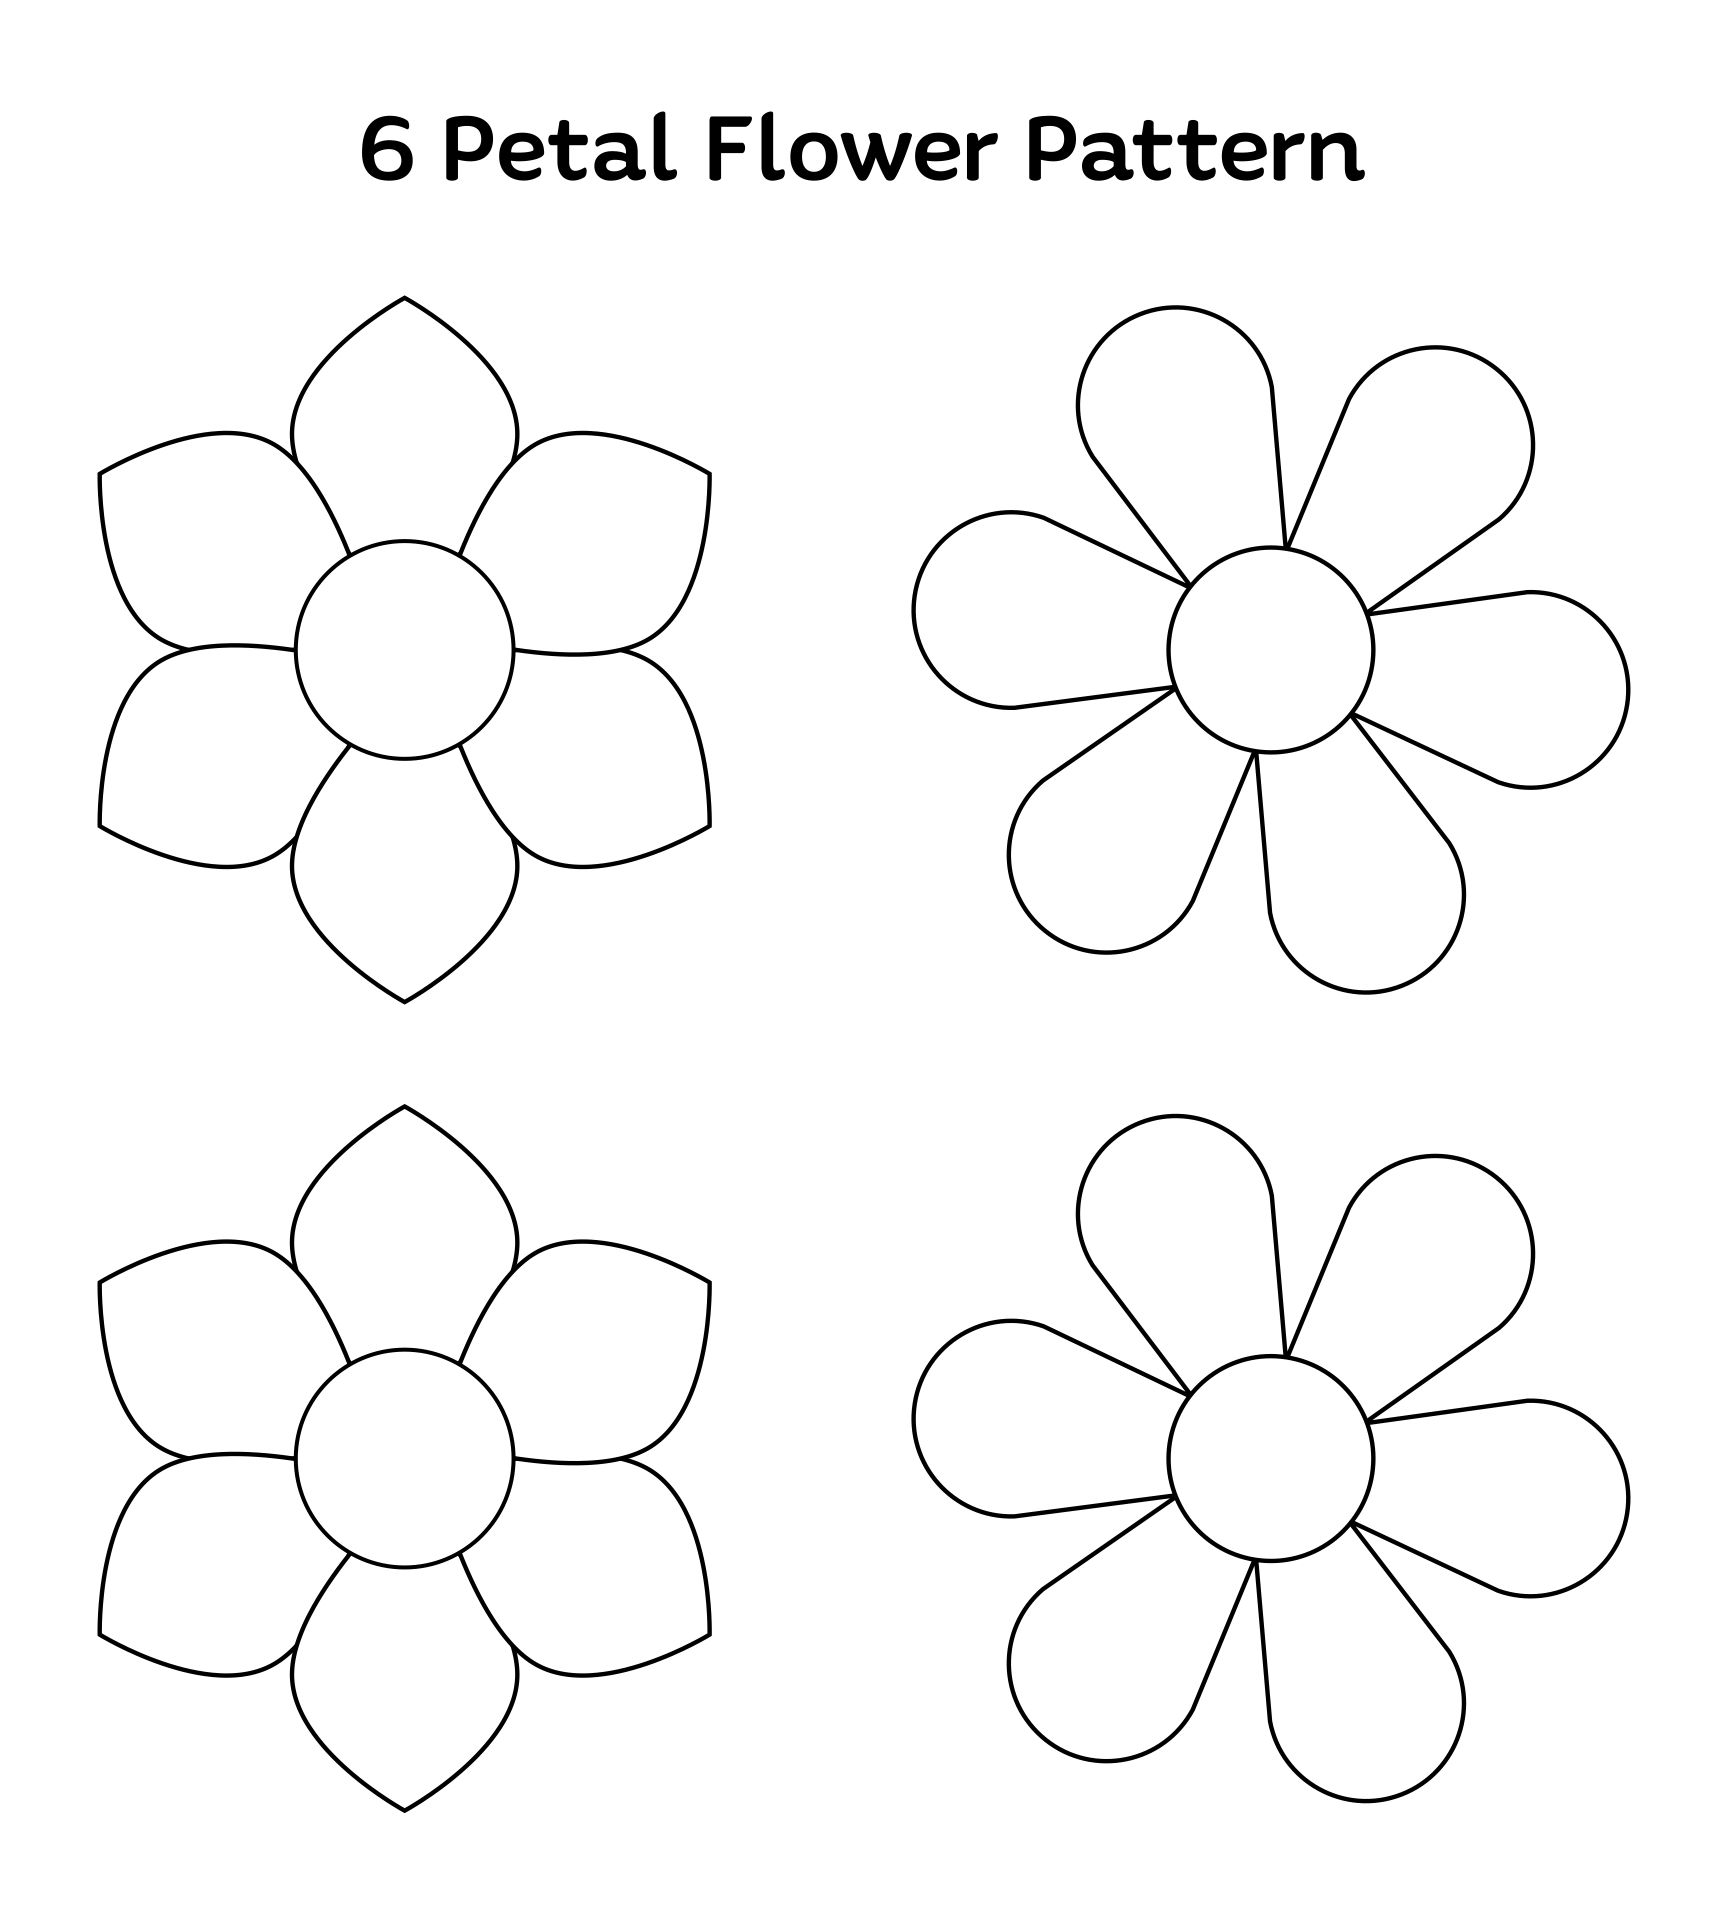 Best Free Paper Flower Templates